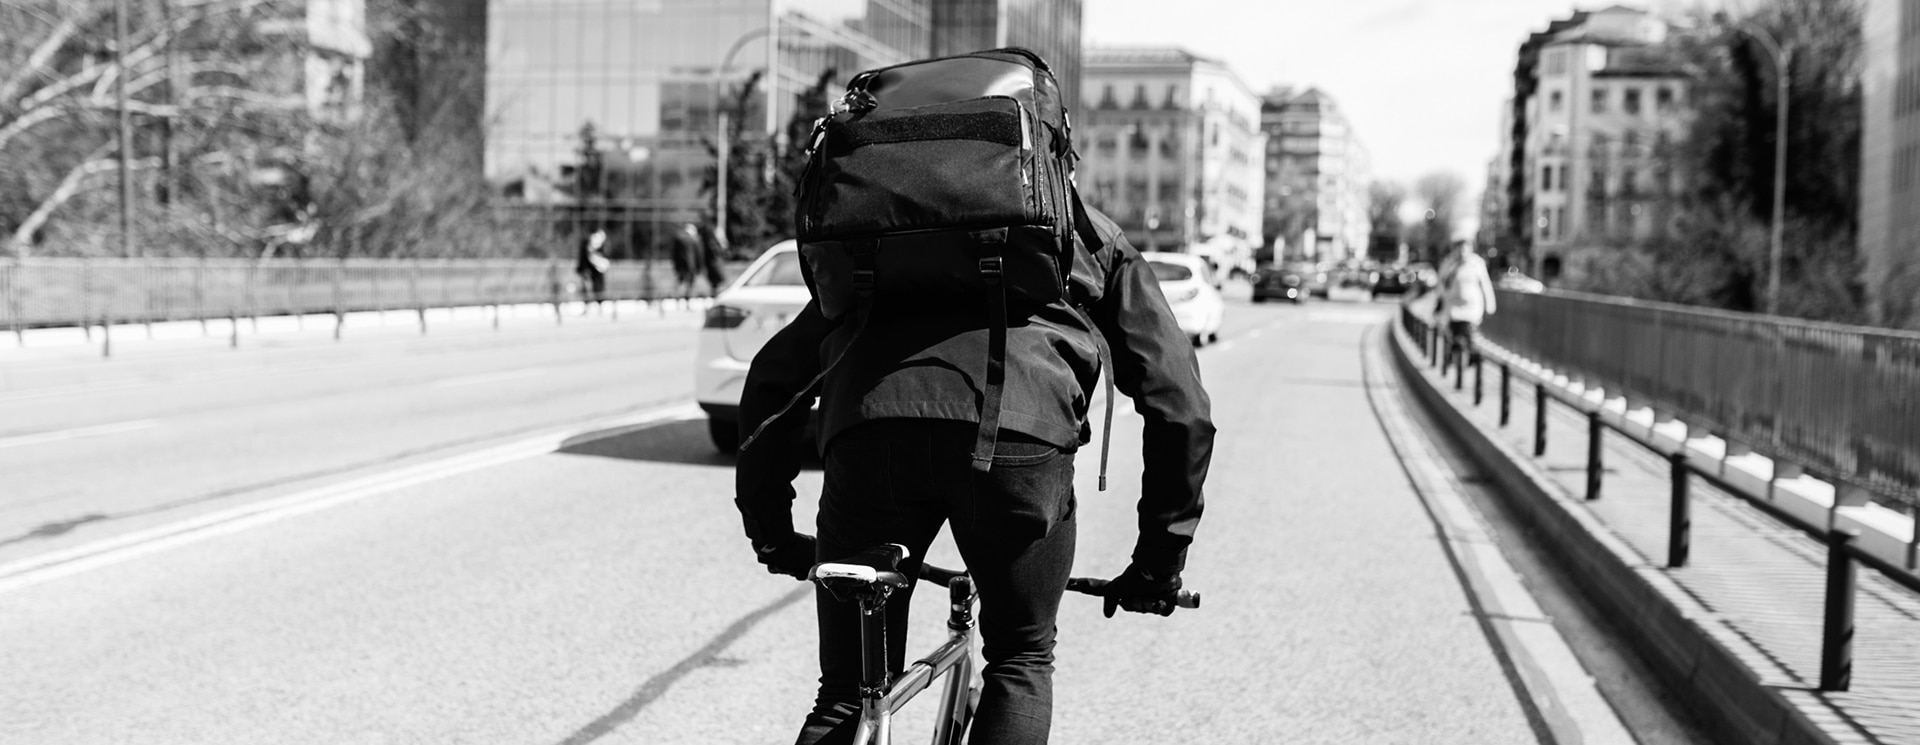 AUTONOMY Paris & the Urban Mobility Weekly talks with Bikeep CEO Kristjan Lind